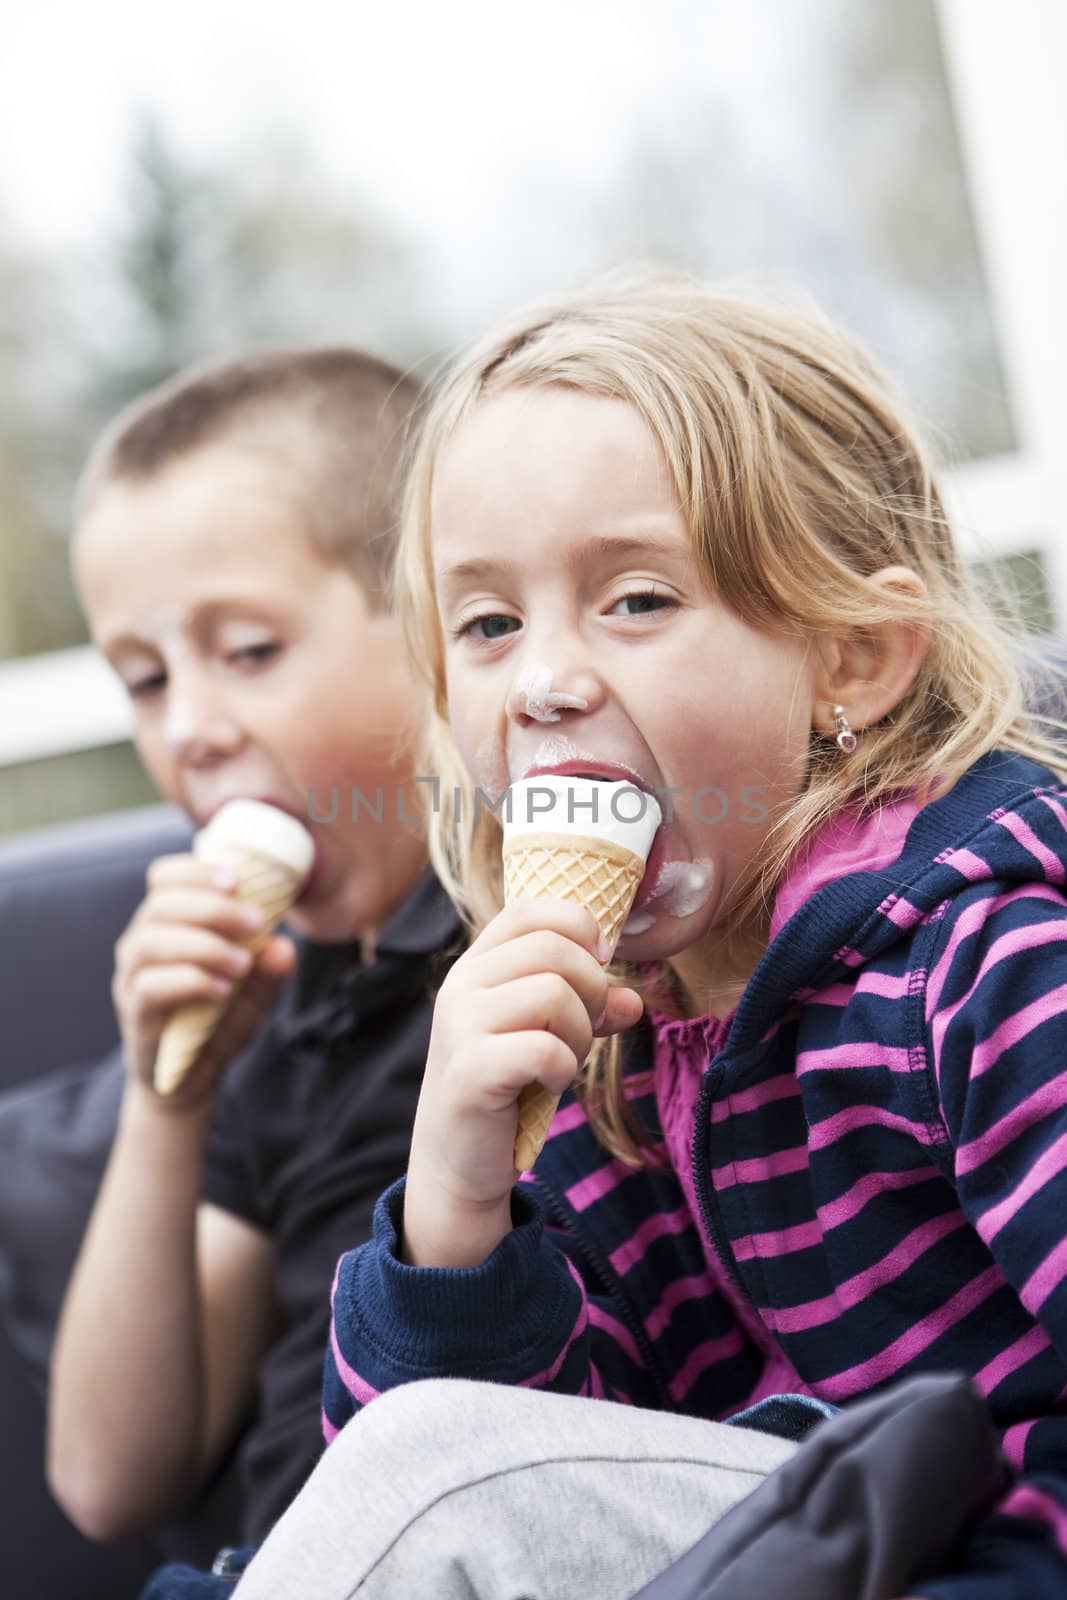 Eating ice-cream by gemenacom